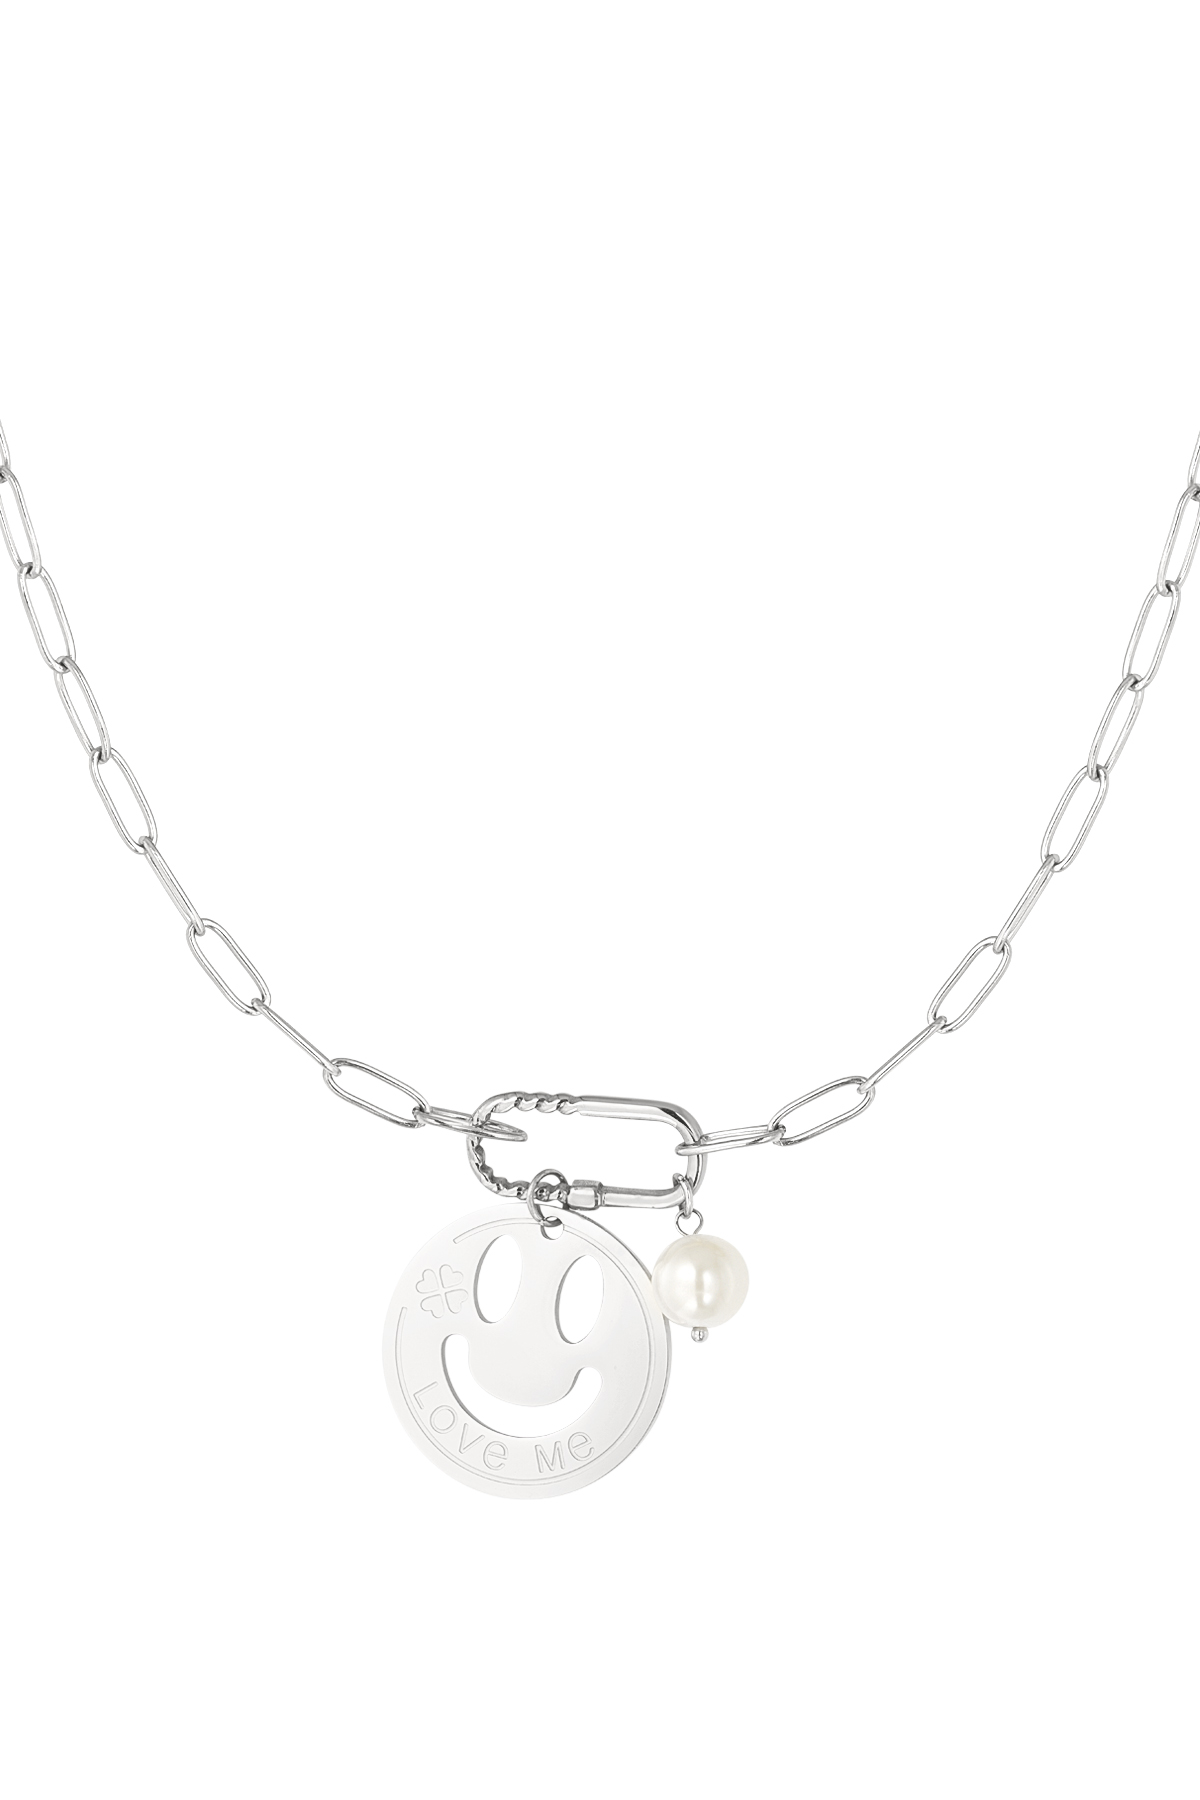 Smiley link necklace - silver  h5 